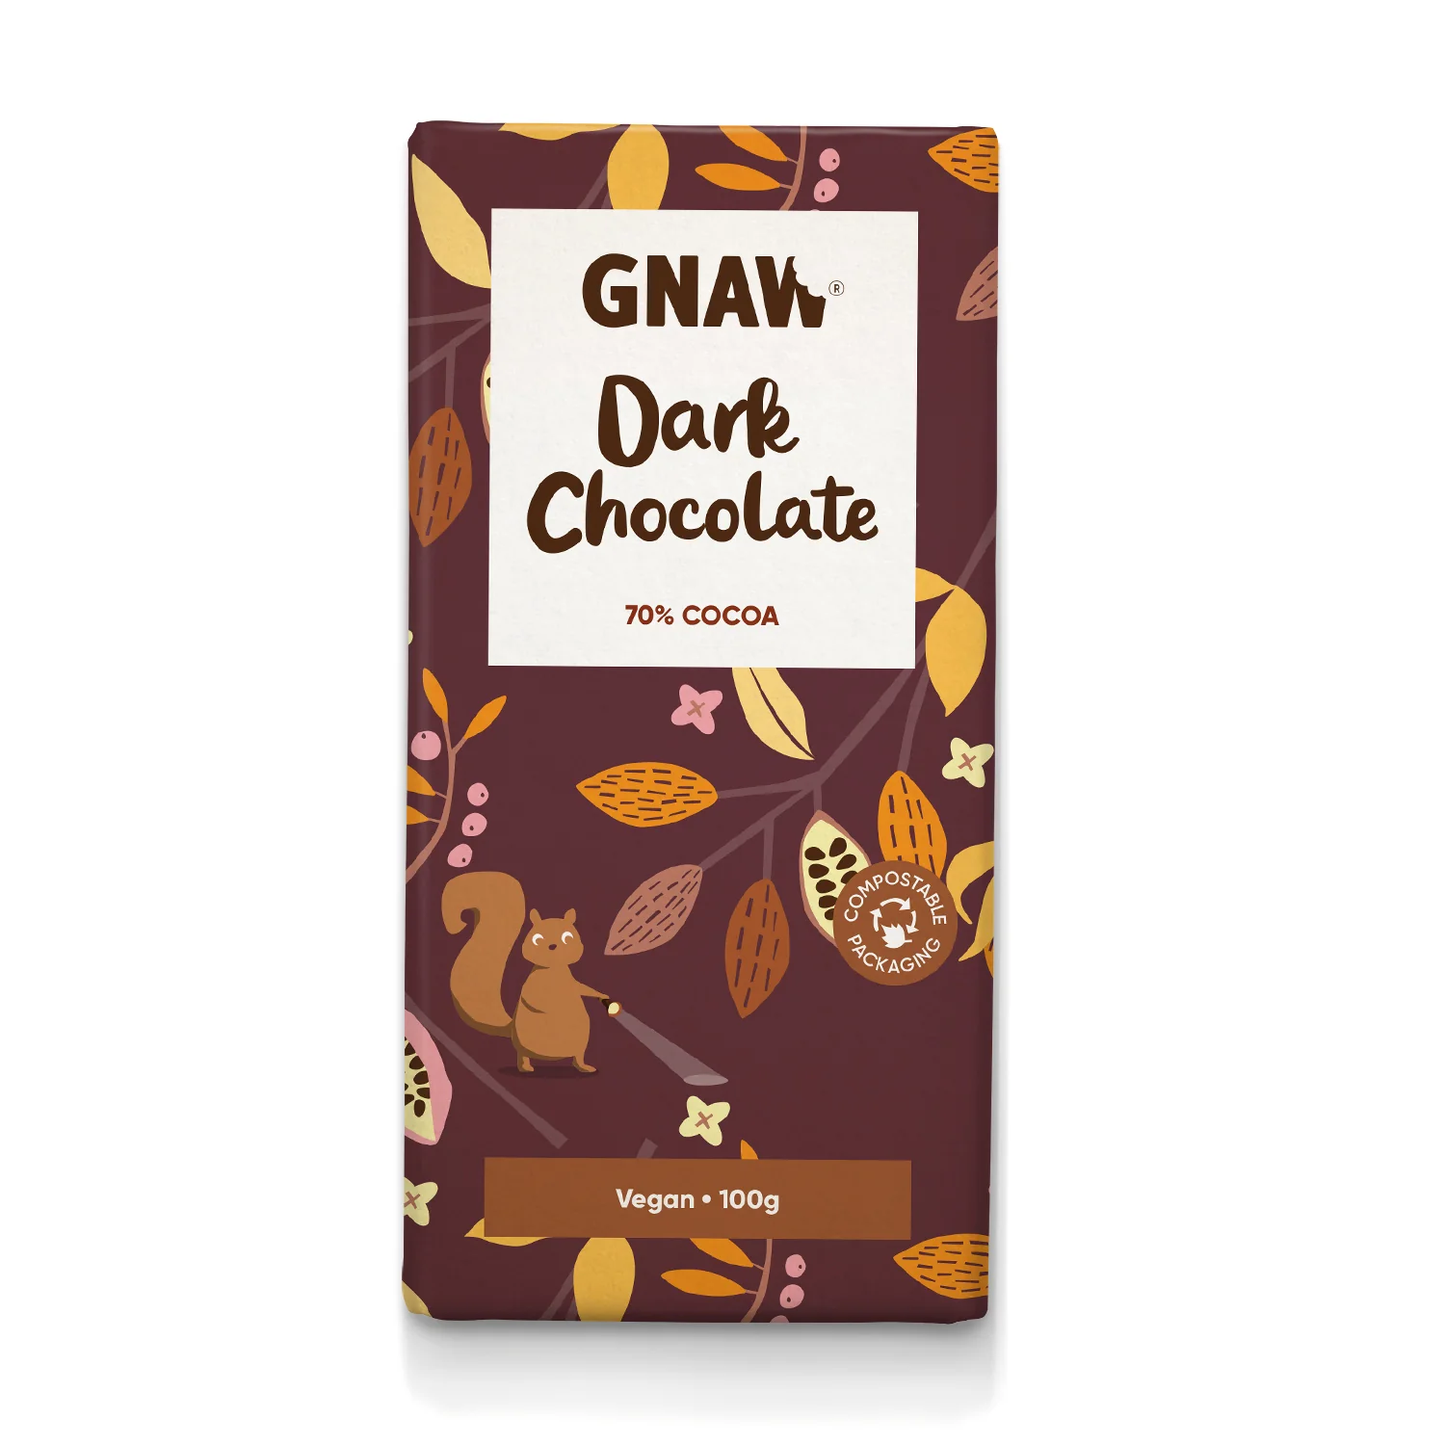 Gnaw Chocolate Handcrafted Dark Chocolate 100g, 70% Cocoa